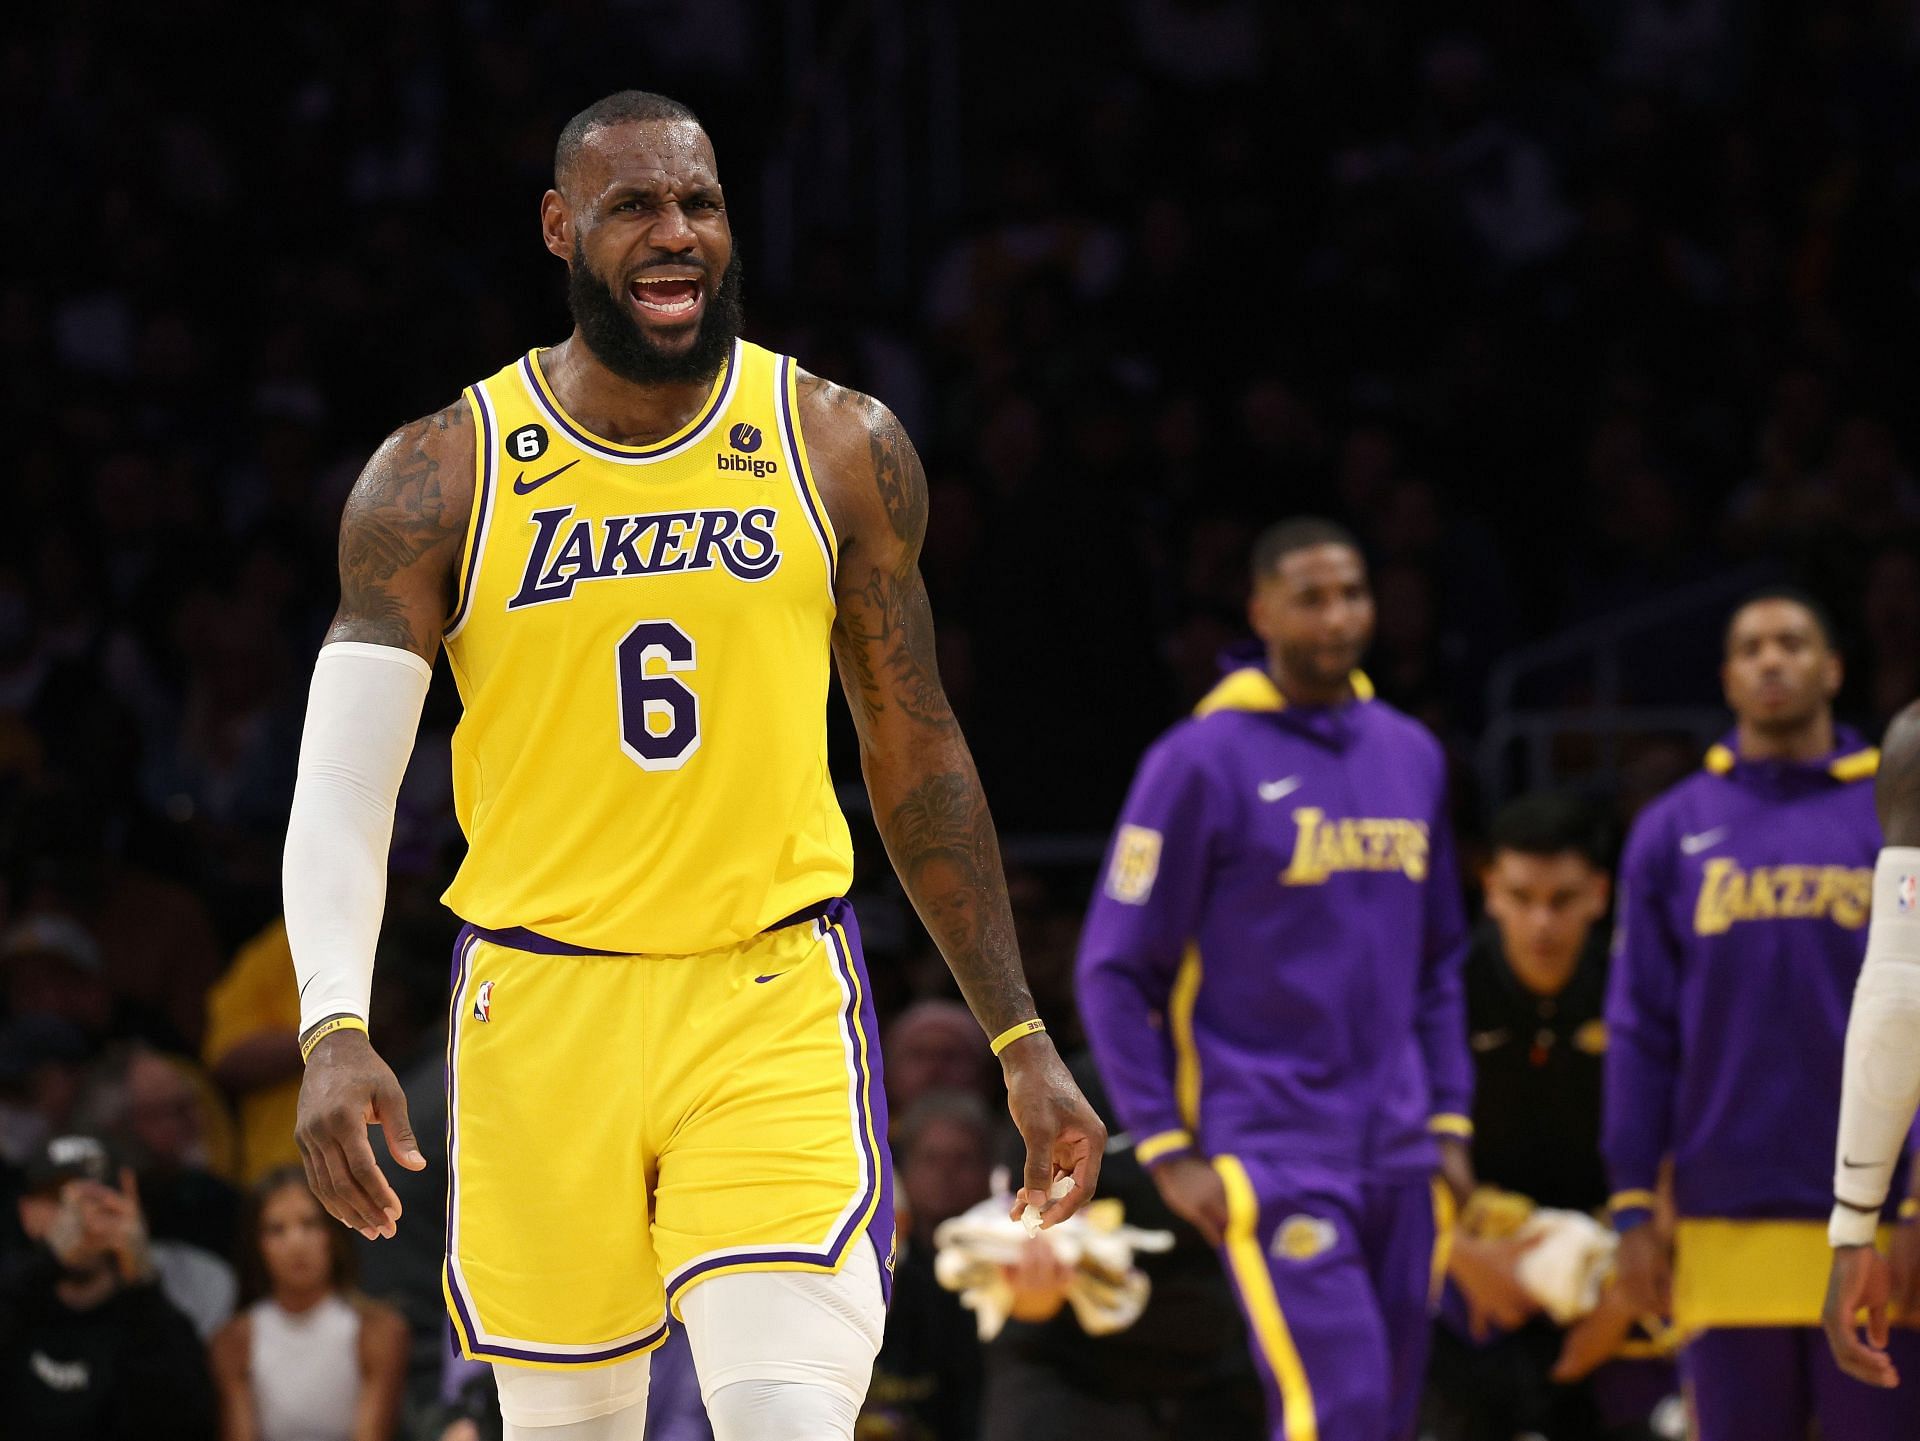 LA Lakers star forward LeBron James